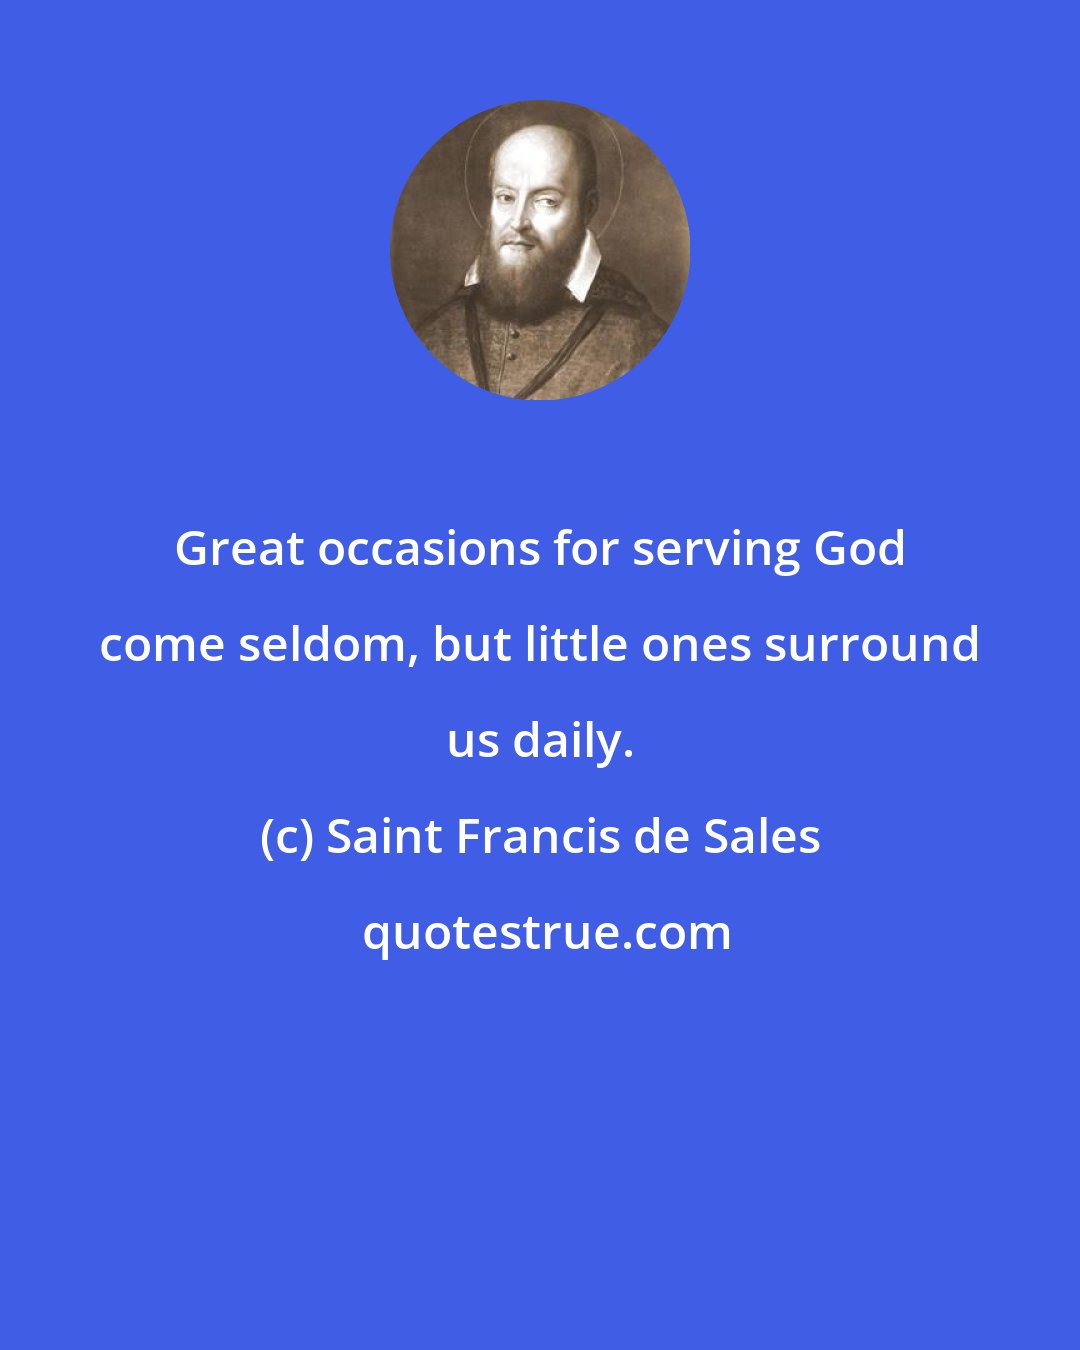 Saint Francis de Sales: Great occasions for serving God come seldom, but little ones surround us daily.